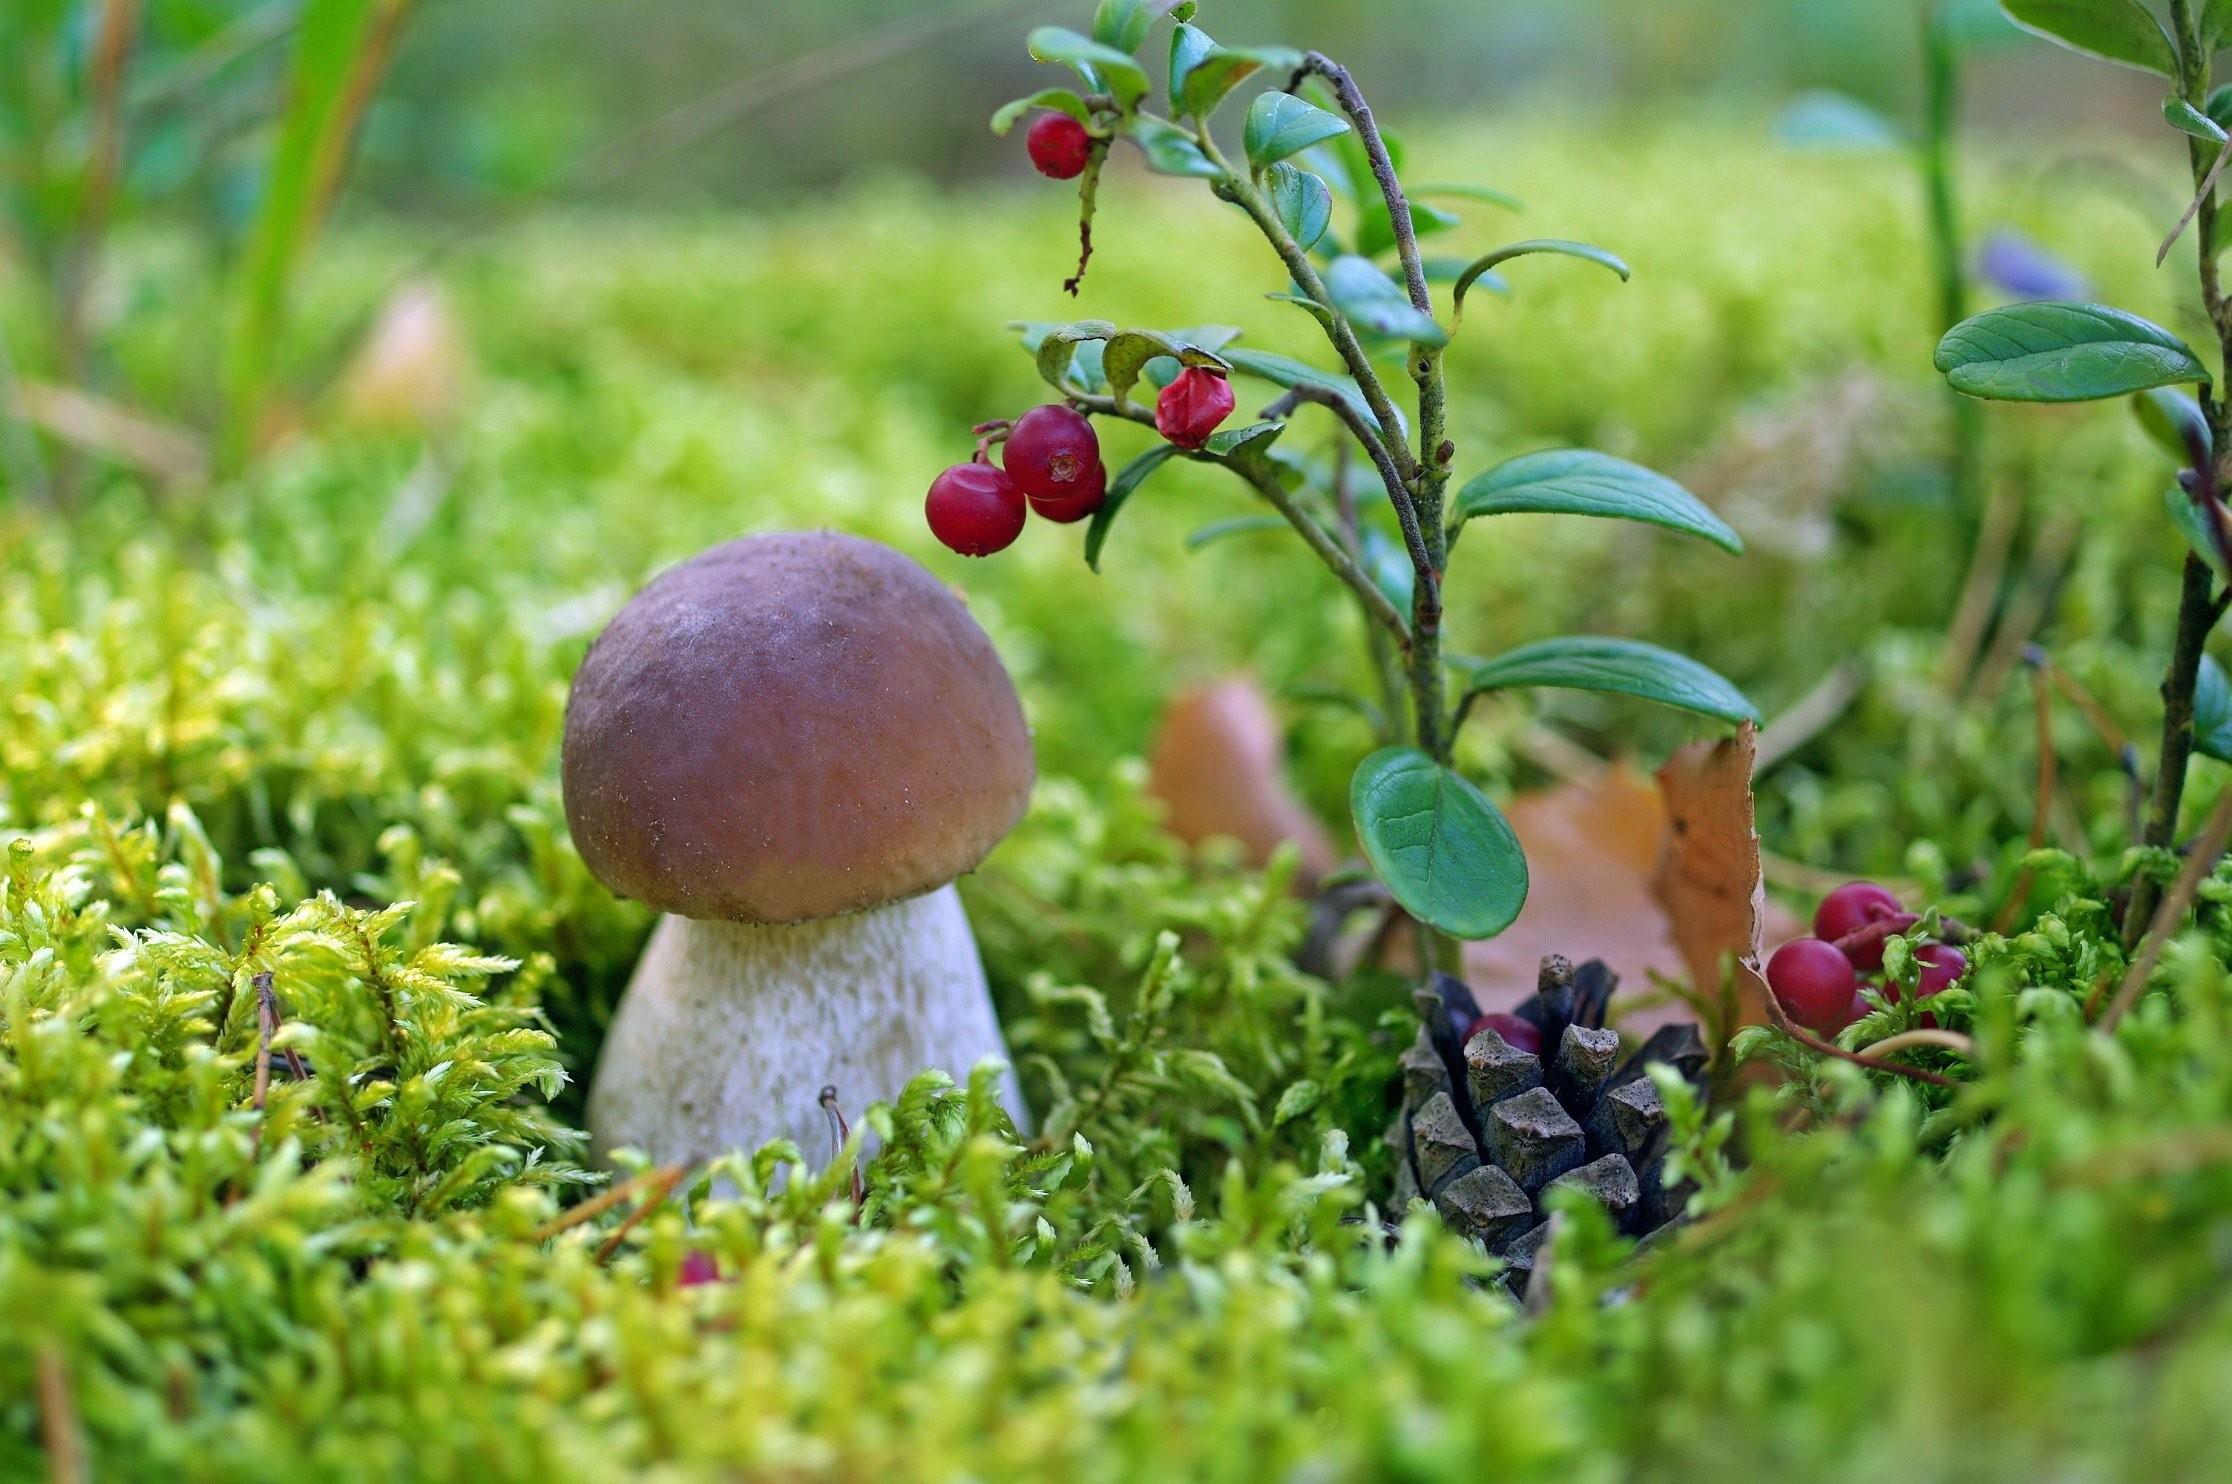 Mushroom, mother Nature, Moss, Nature Wallpaper Full HD, Berries